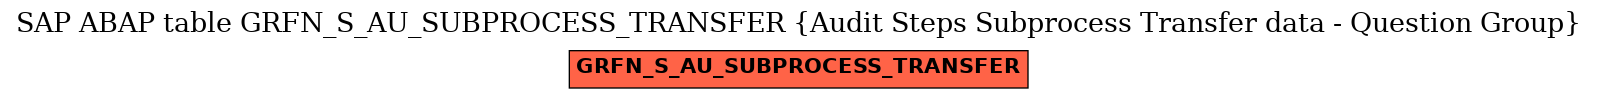 E-R Diagram for table GRFN_S_AU_SUBPROCESS_TRANSFER (Audit Steps Subprocess Transfer data - Question Group)